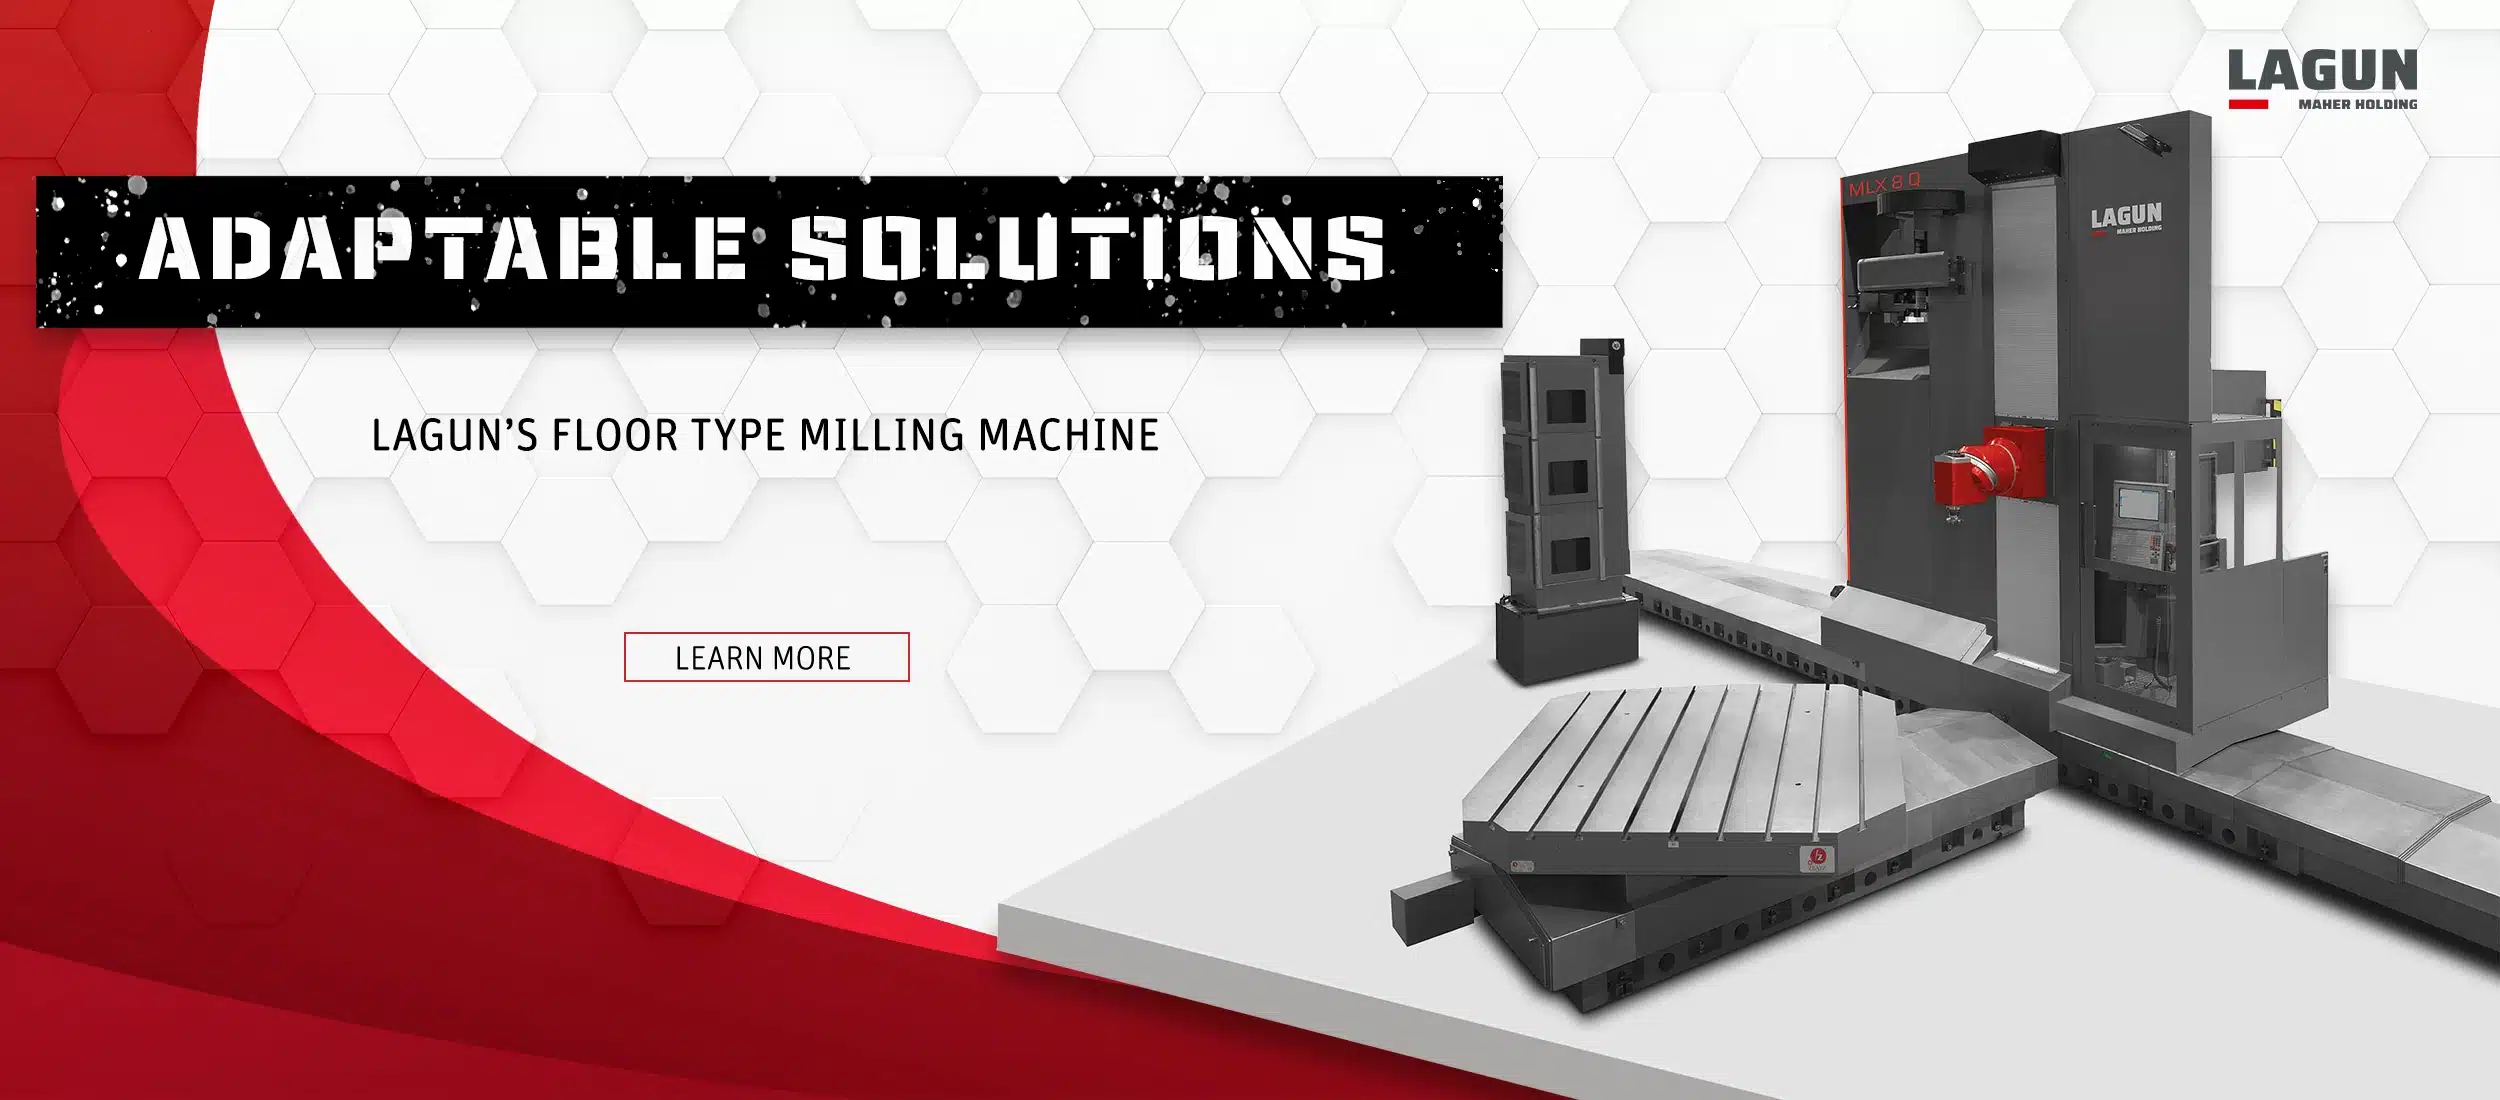 Adaptable Solutions. Lagun's MM-ML Floor Type Milling Machine